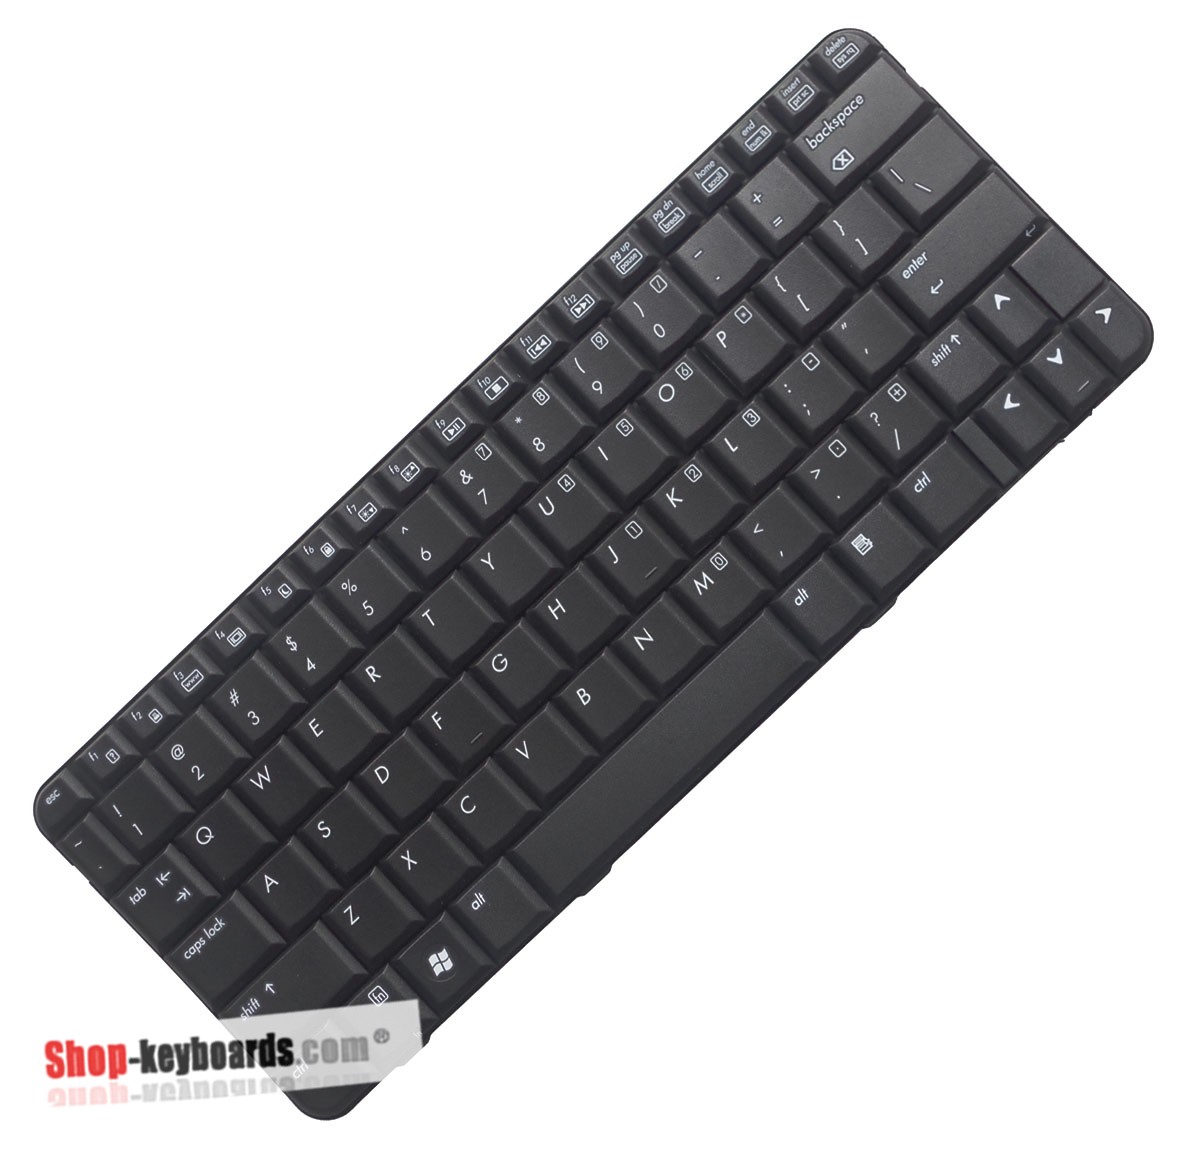 Compaq Presario CQ20-300 Keyboard replacement